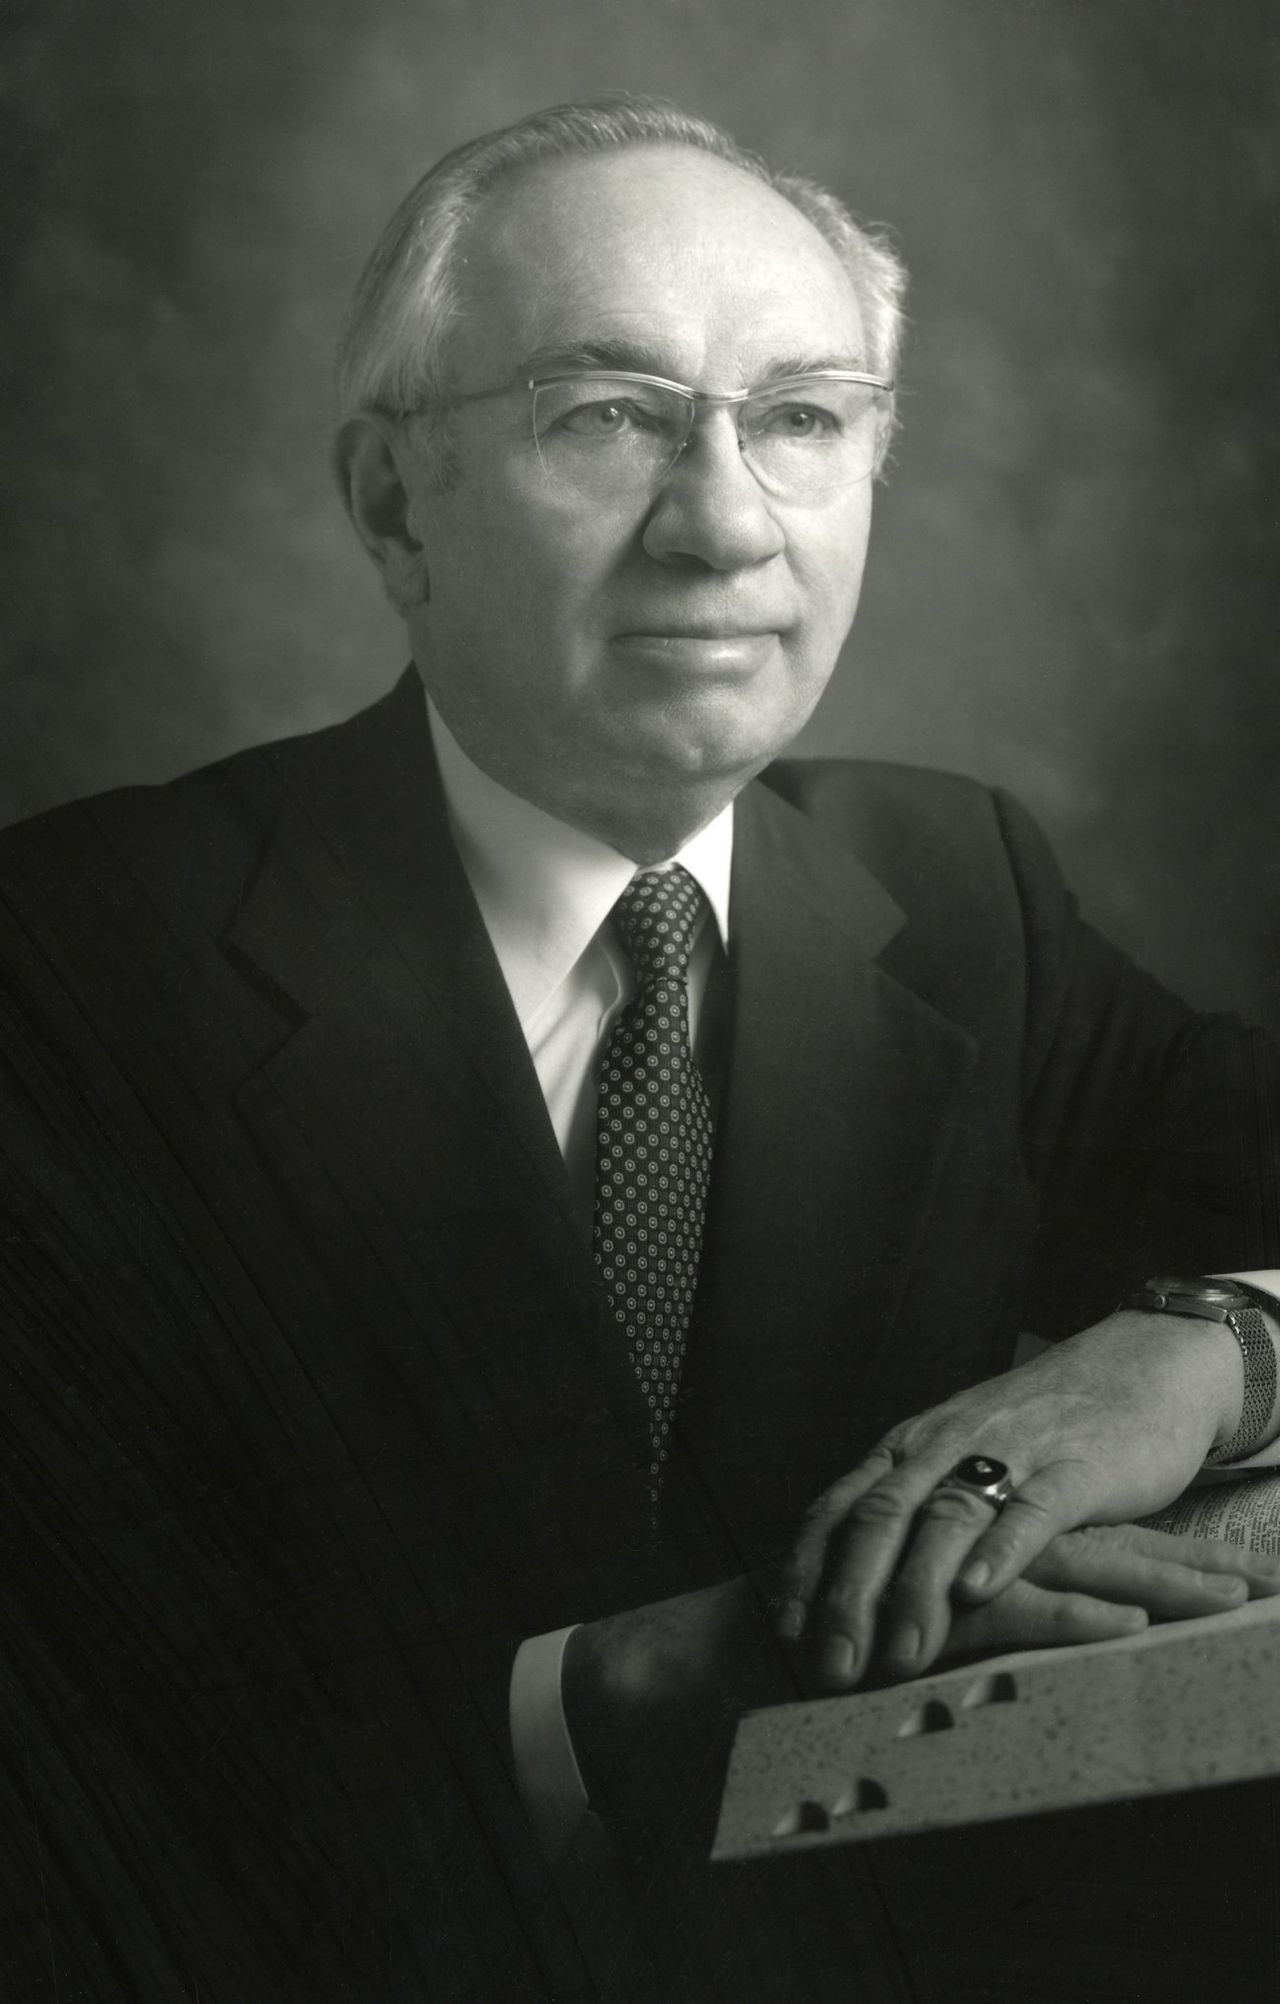 A portrait of President Gordon B. Hinckley.